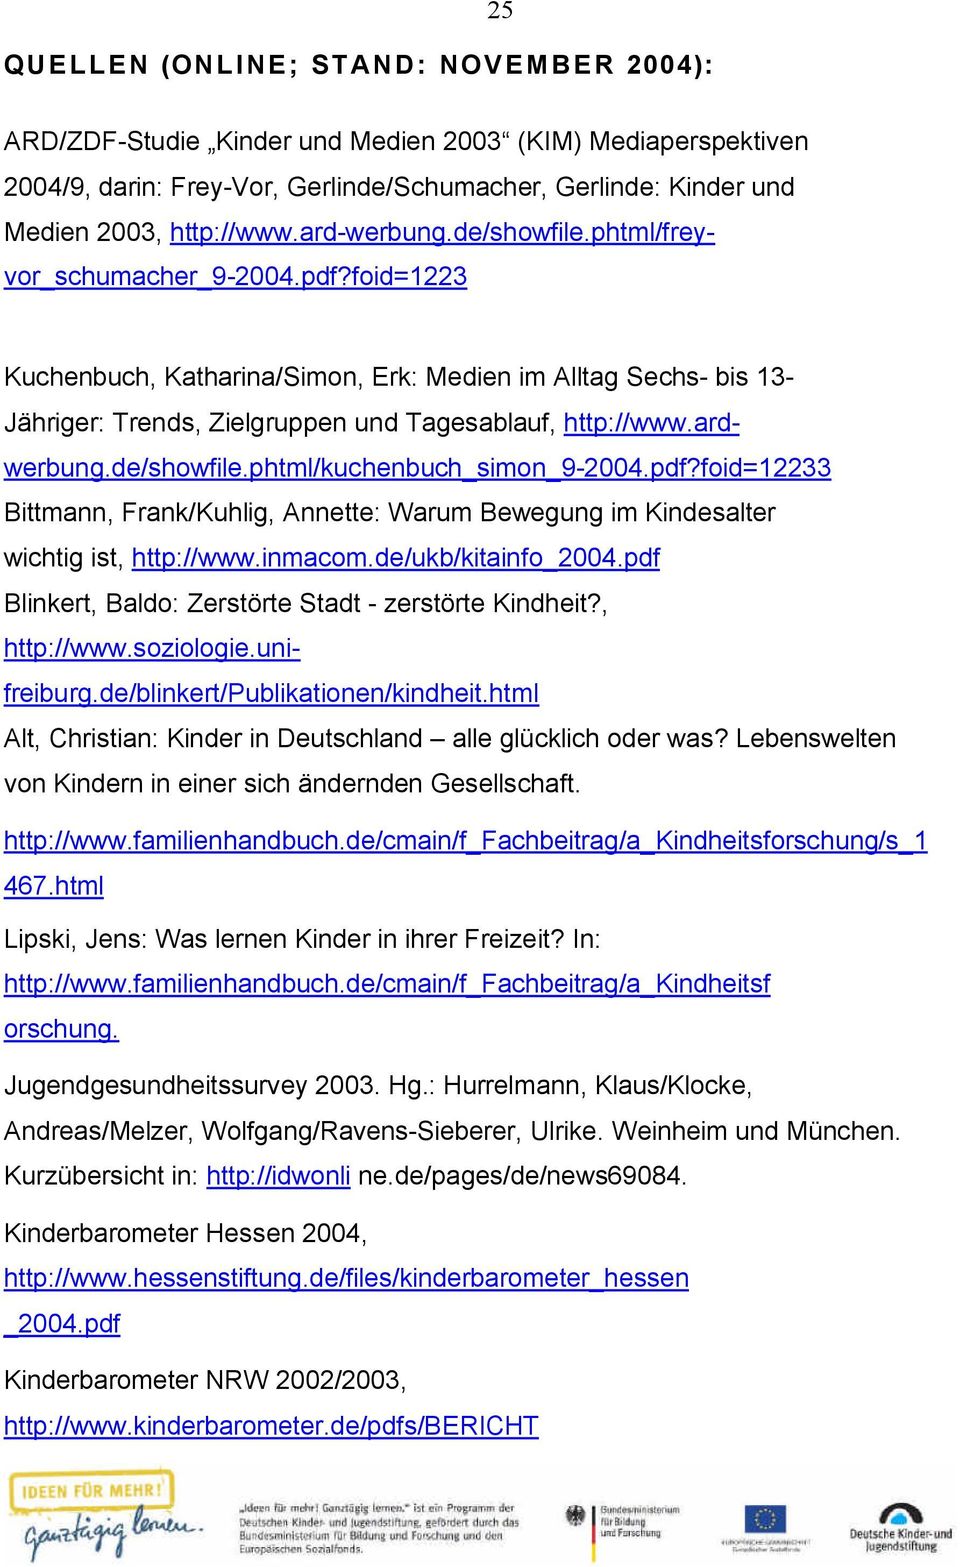 ardwerbung.de/showfile.phtml/kuchenbuch_simon_9-2004.pdf?foid=12233 Bittmann, Frank/Kuhlig, Annette: Warum Bewegung im Kindesalter wichtig ist, http://www.inmacom.de/ukb/kitainfo_2004.